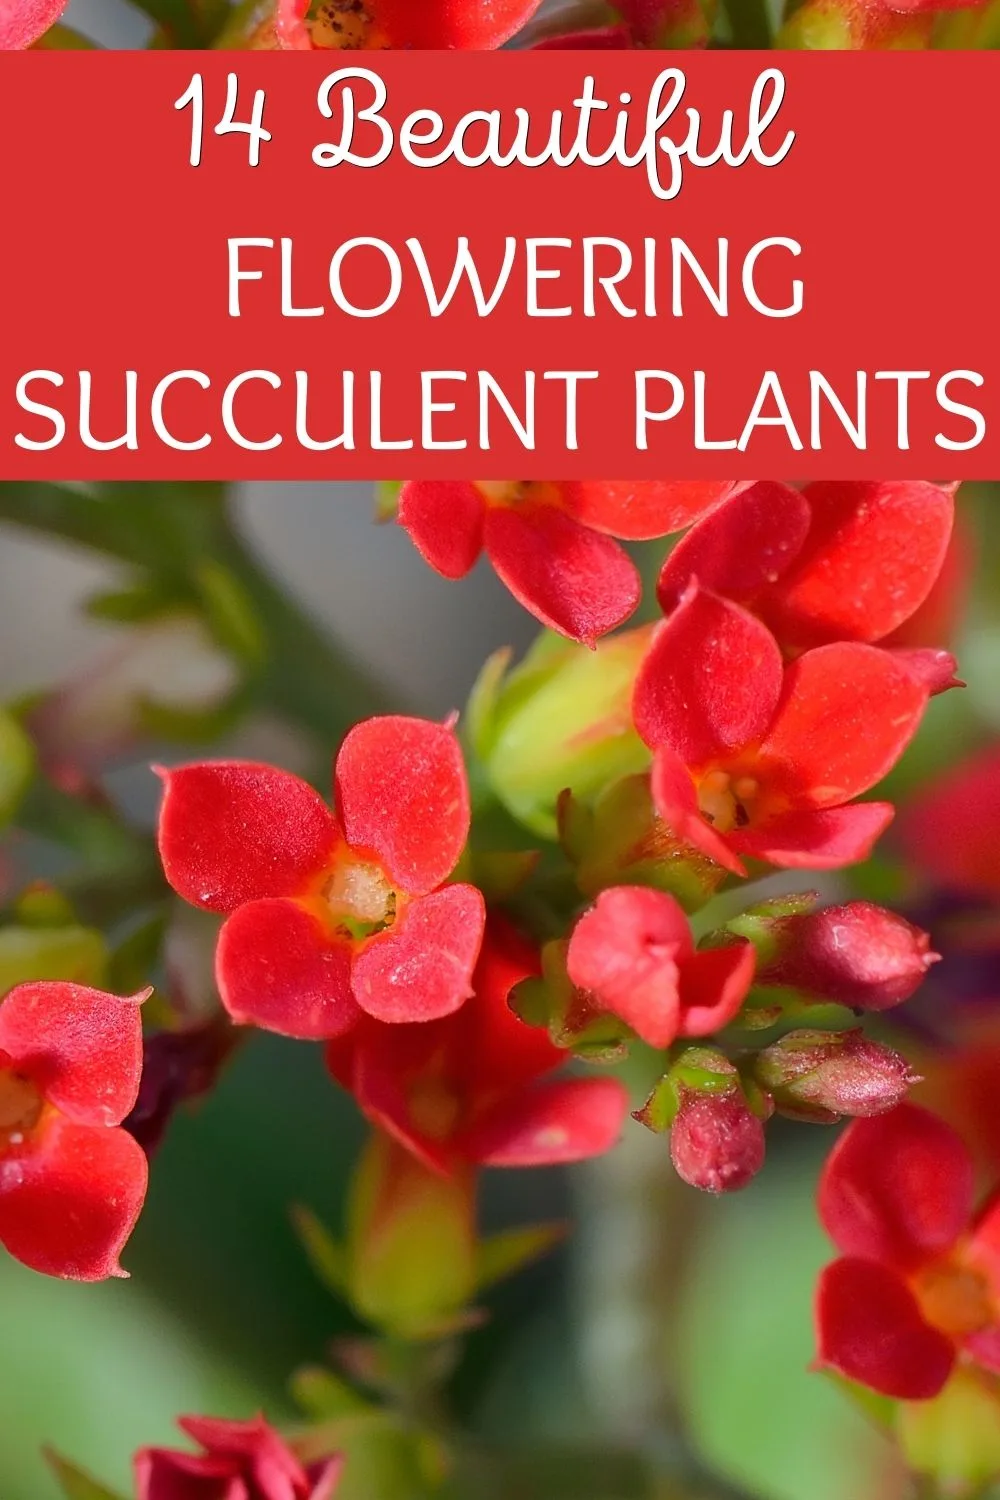 14 beautiful flowering succulent plants